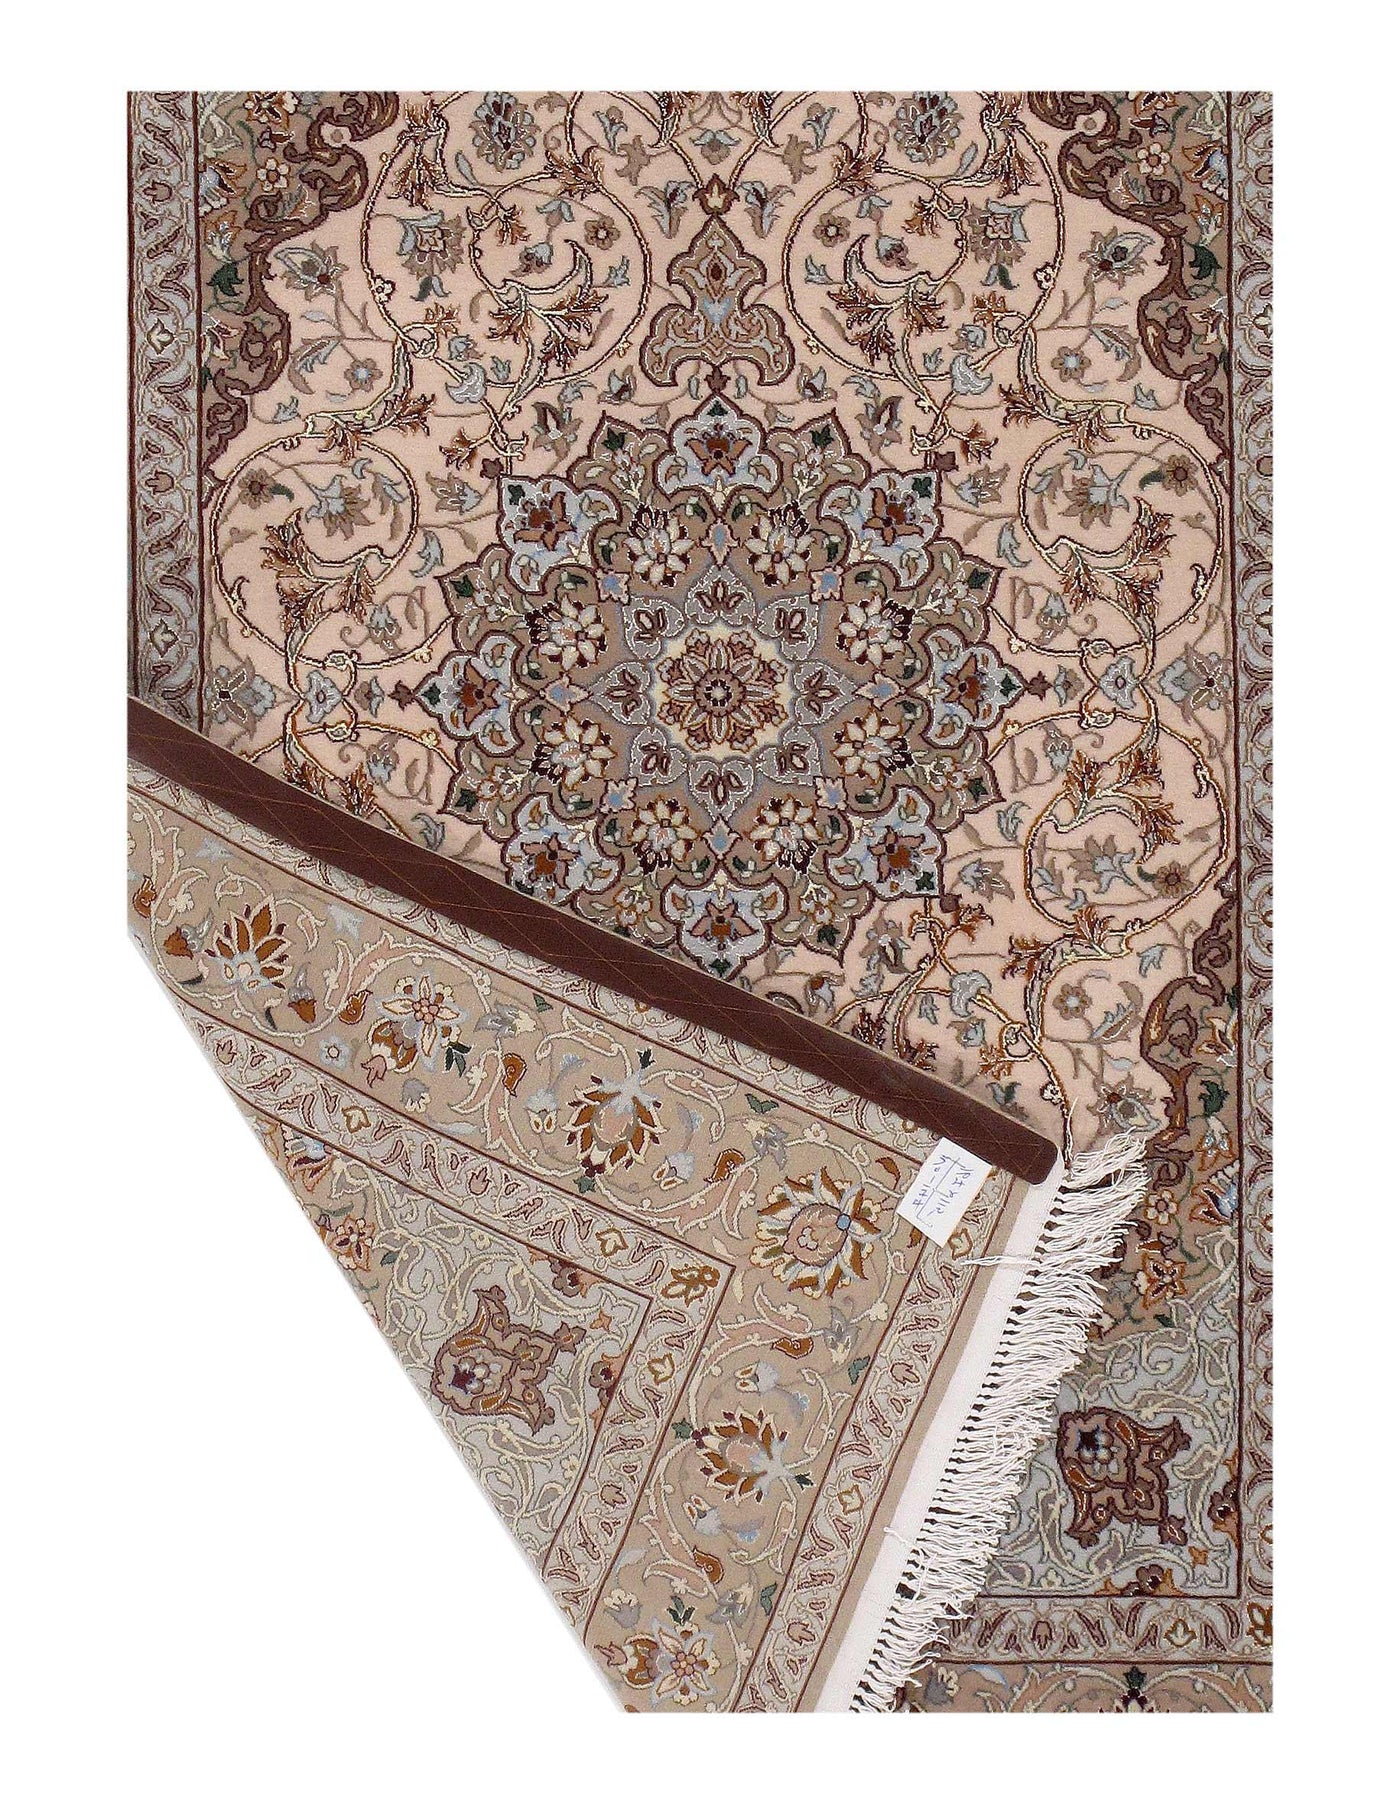 Ivory Persian Isfahan Rug - 4' x 5'6"